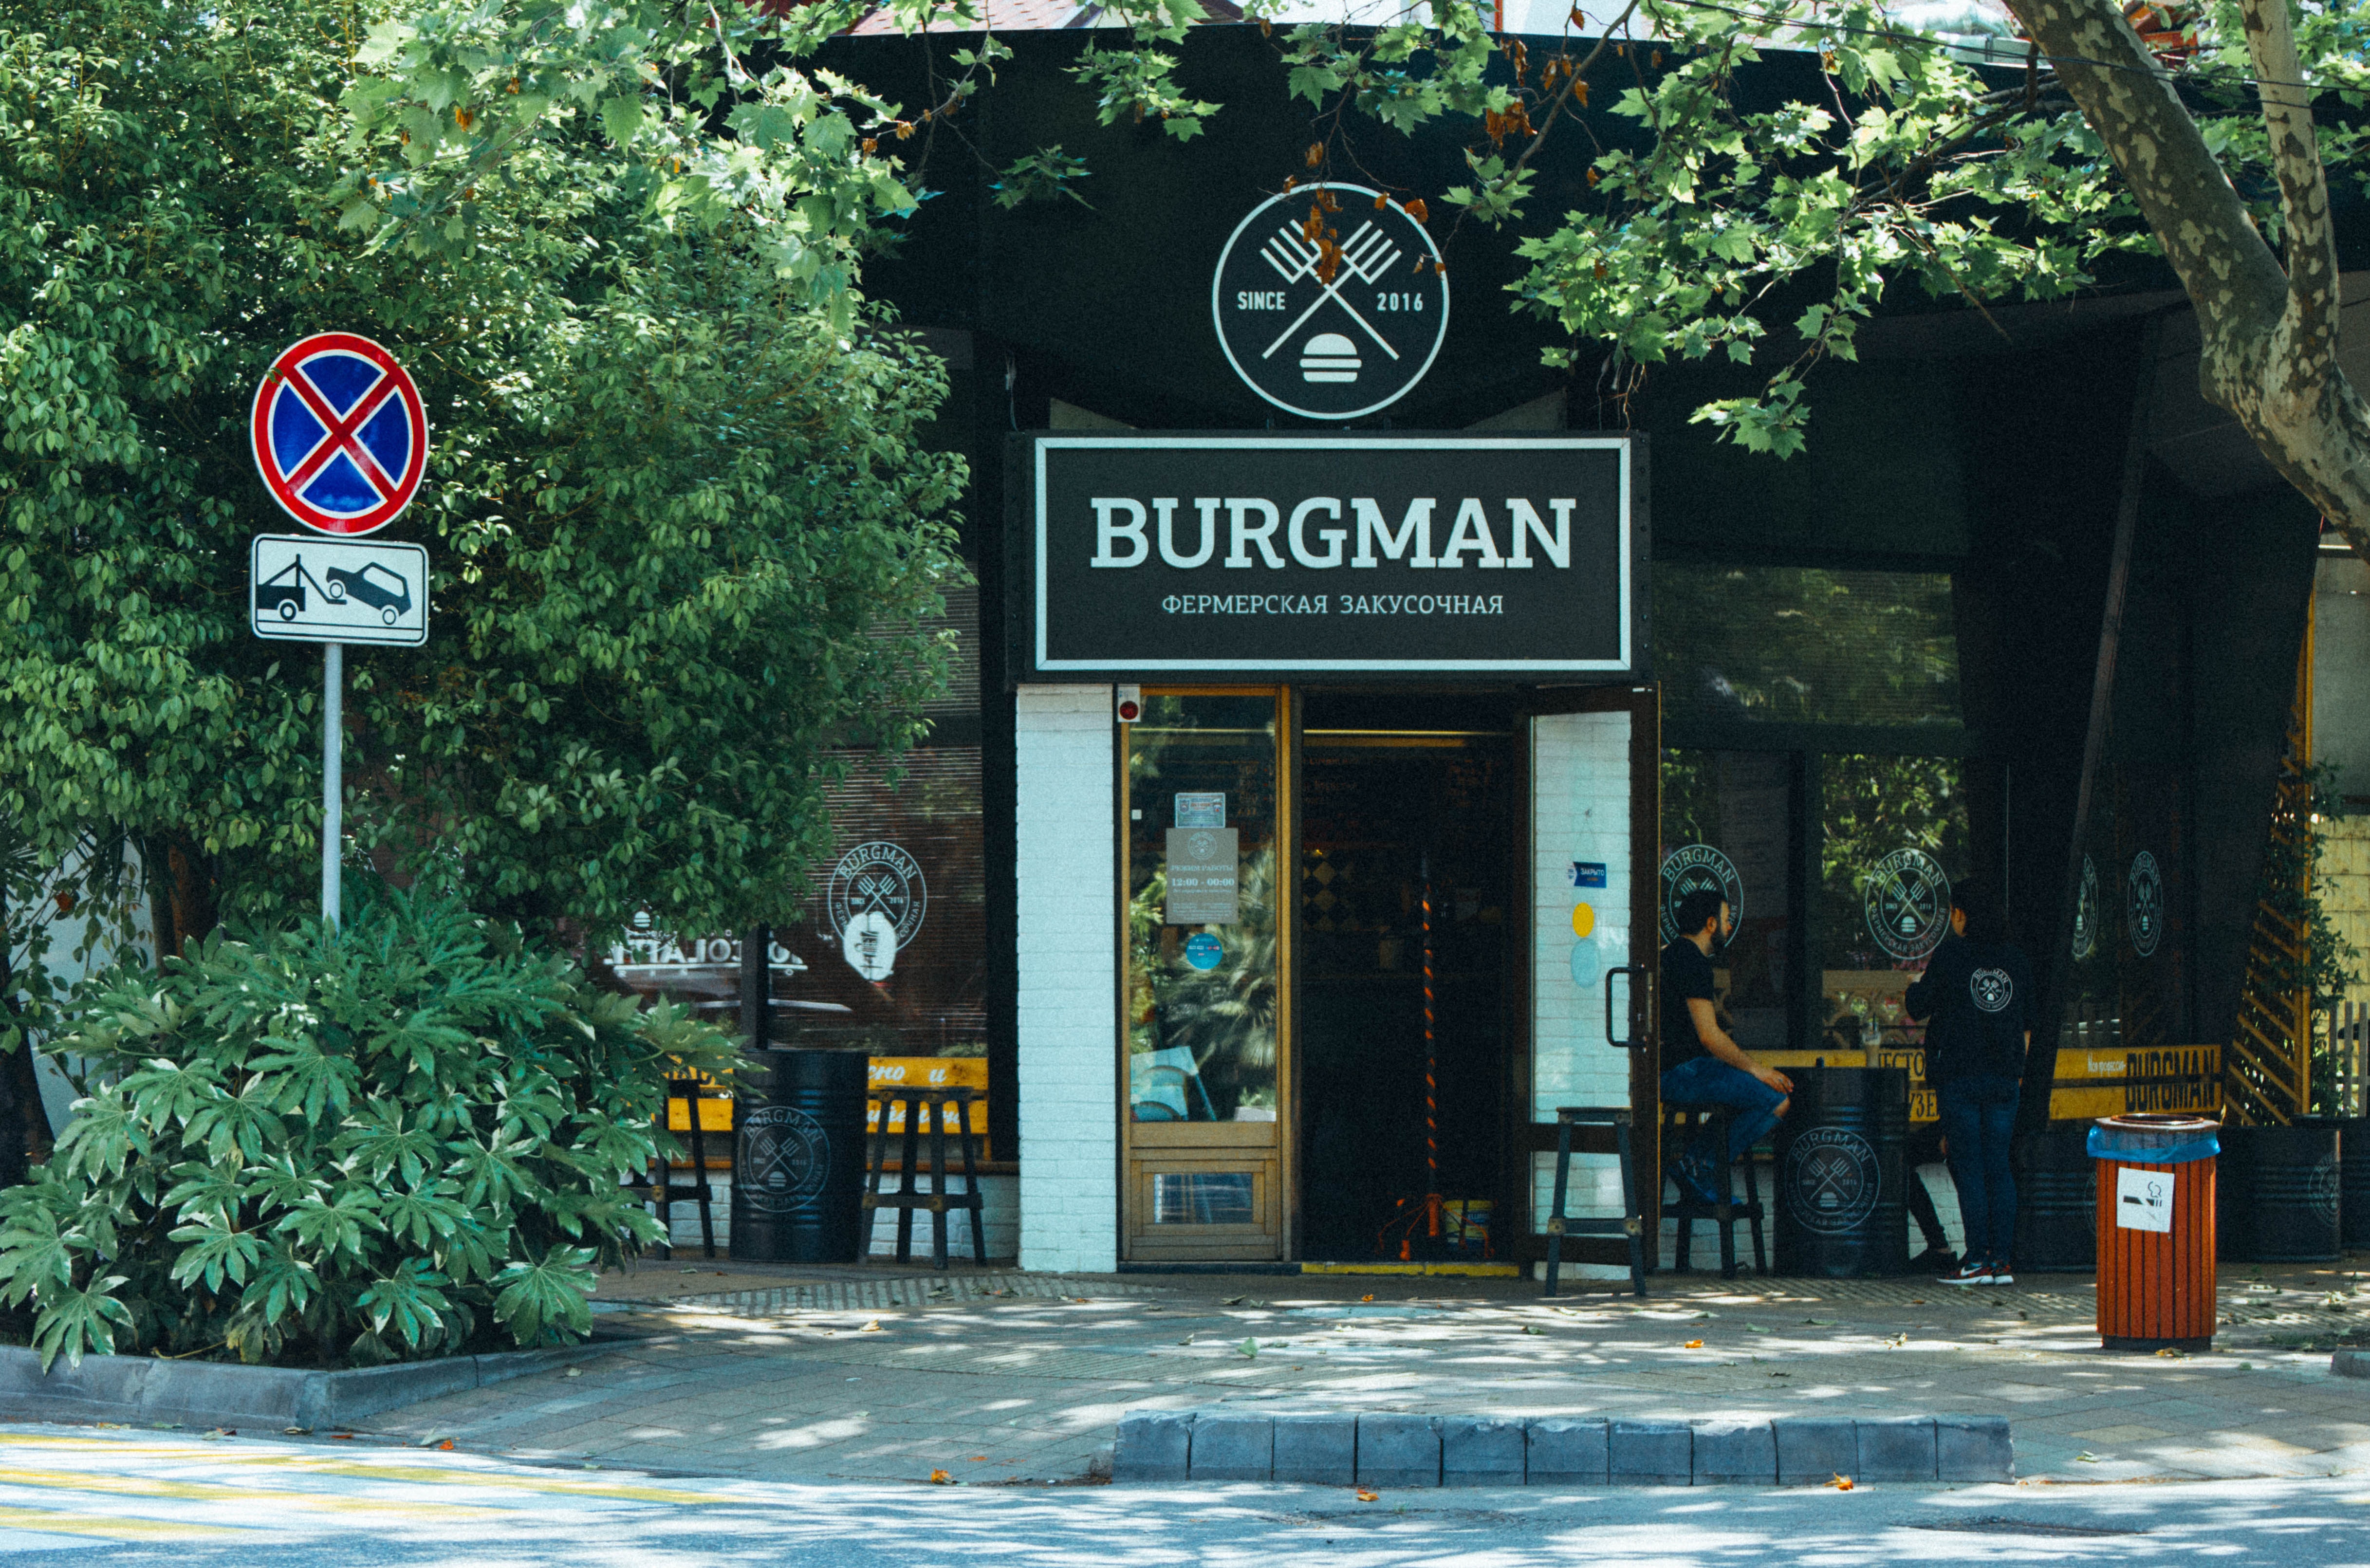 Burgman Boutique, Shop, Urban, Trees, Trash can, HQ Photo